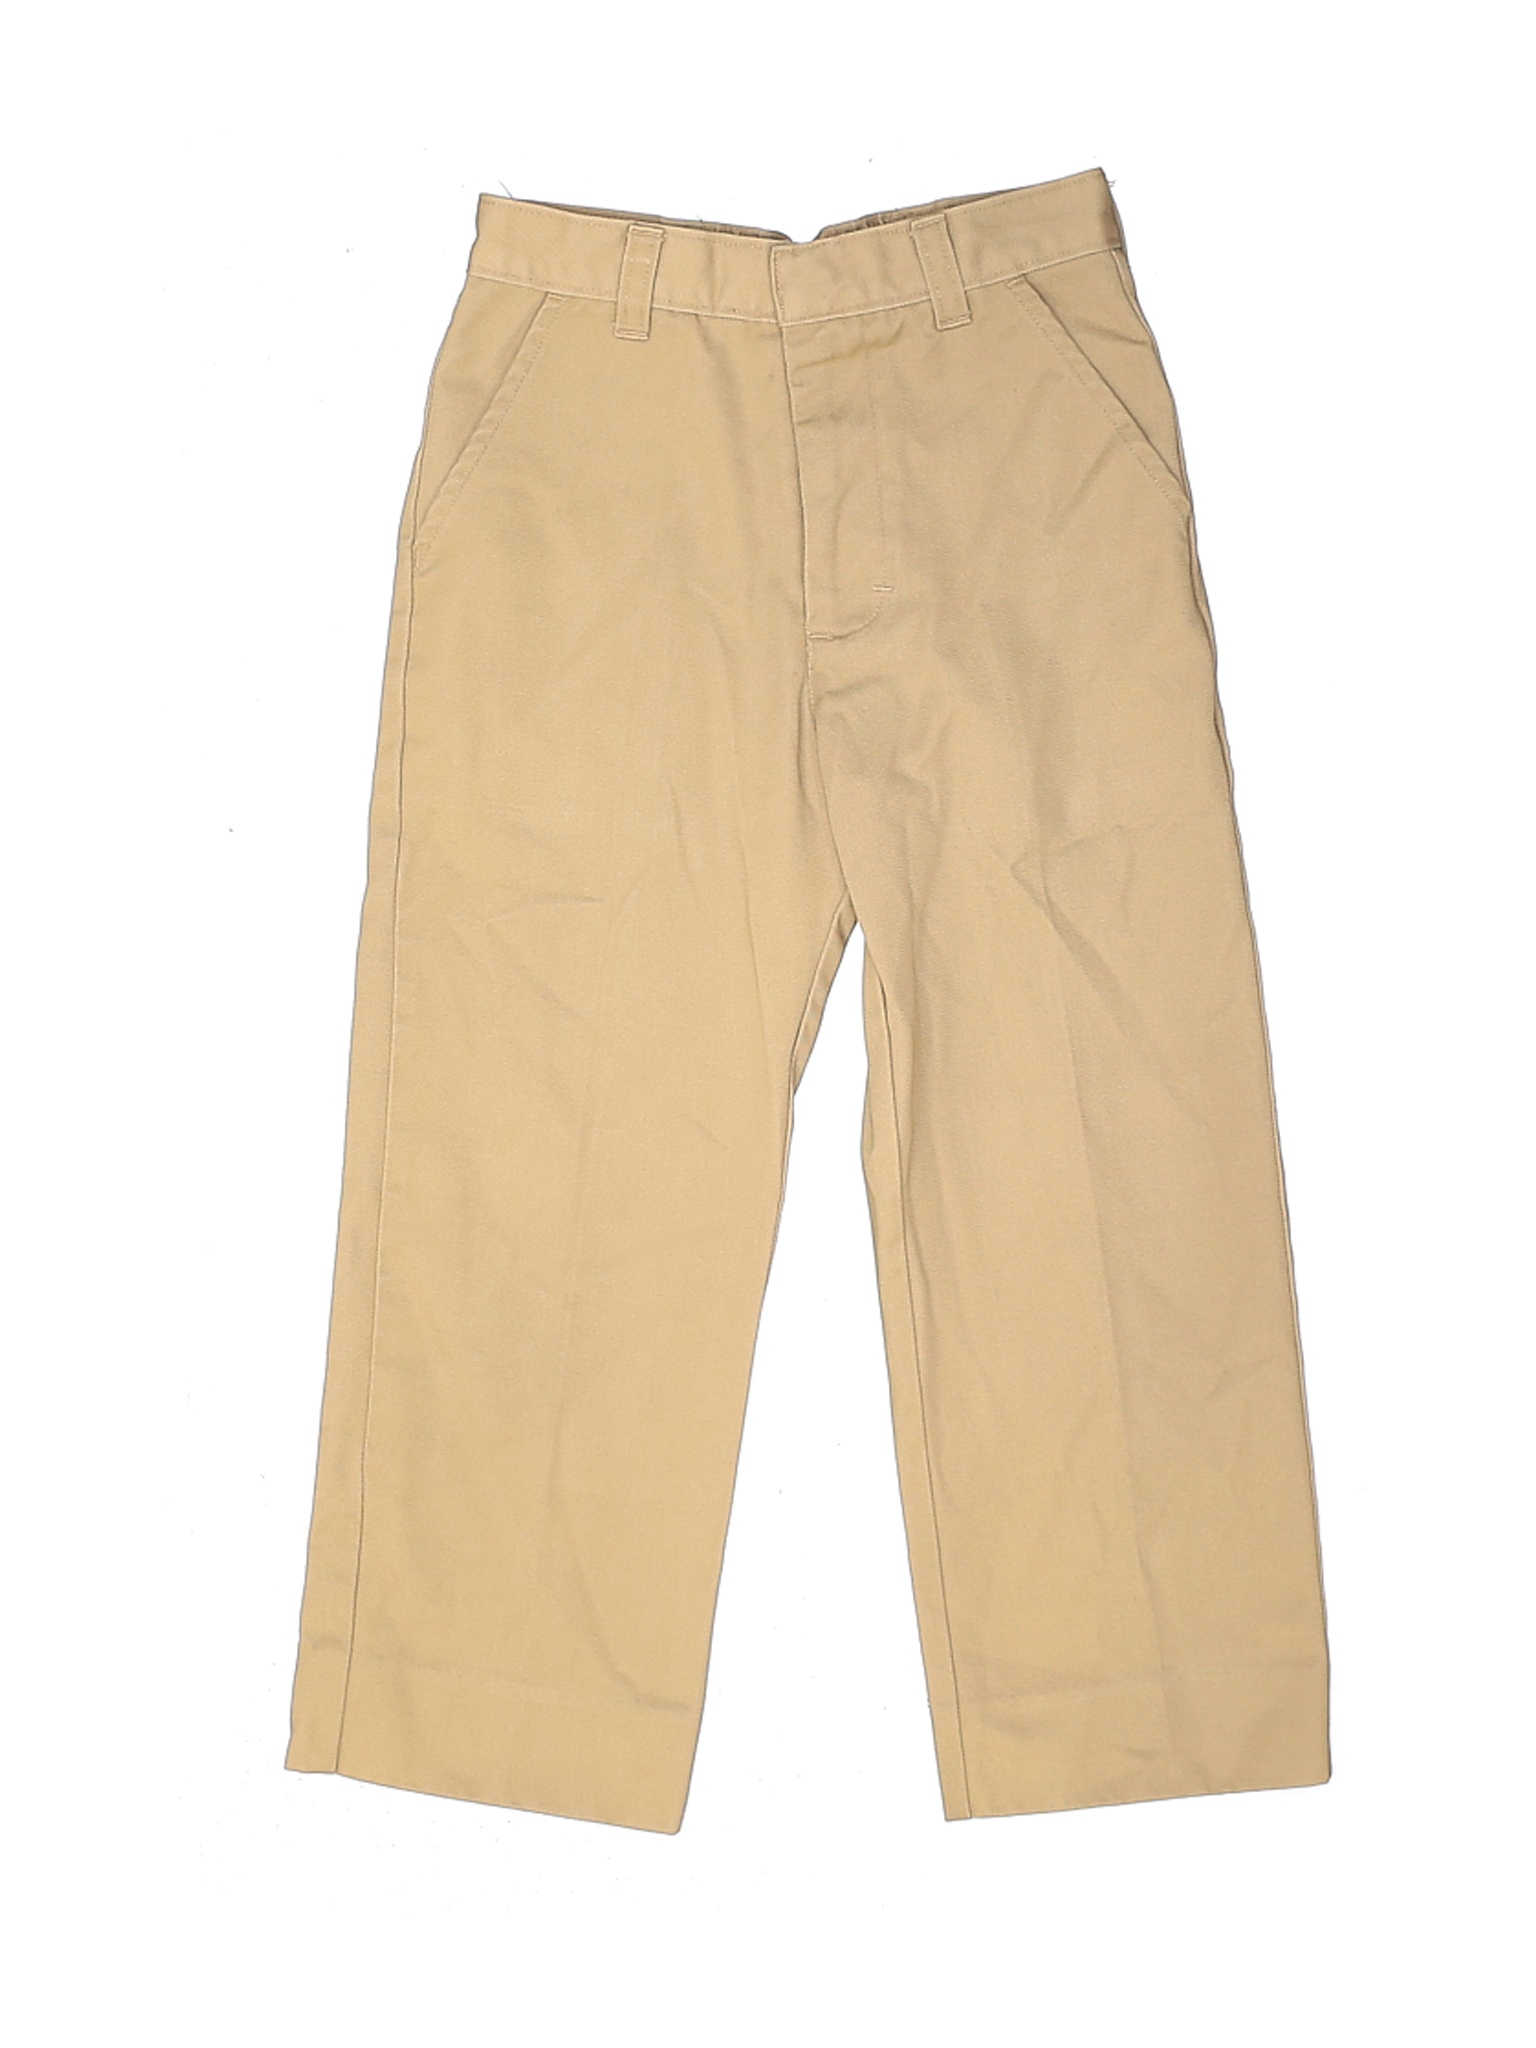 Classroom School Uniforms Boys Brown Khakis 5 | eBay